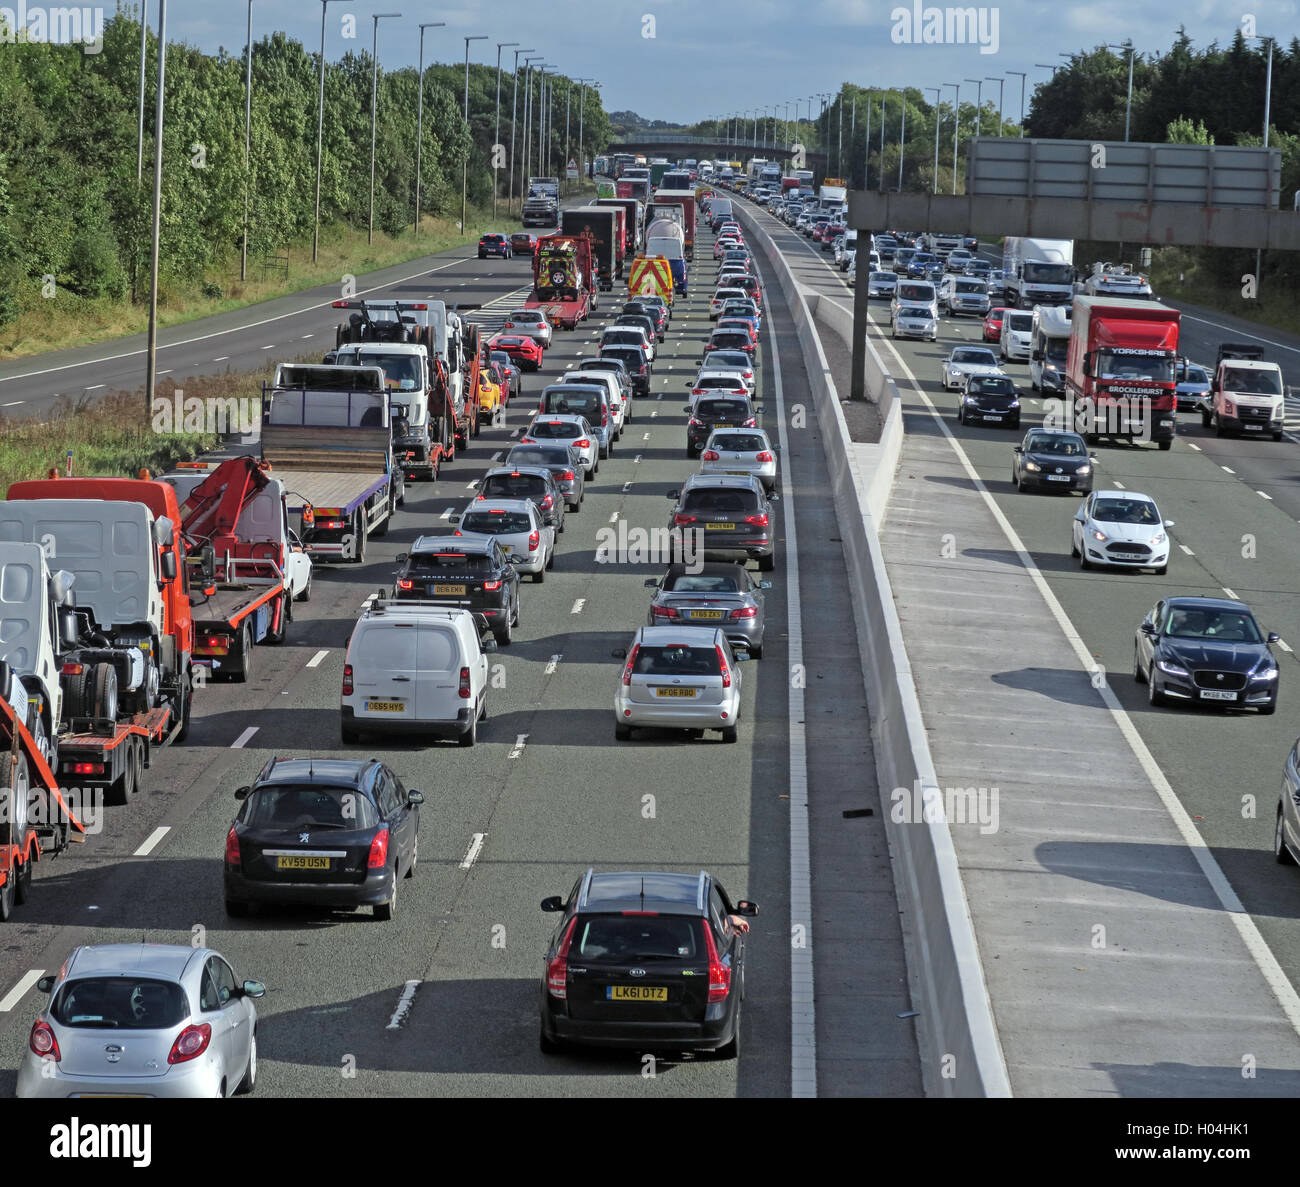 Traffic Congestion,Jams on the M6 Motorway,Warrington,Cheshire,England,UK Stock Photo